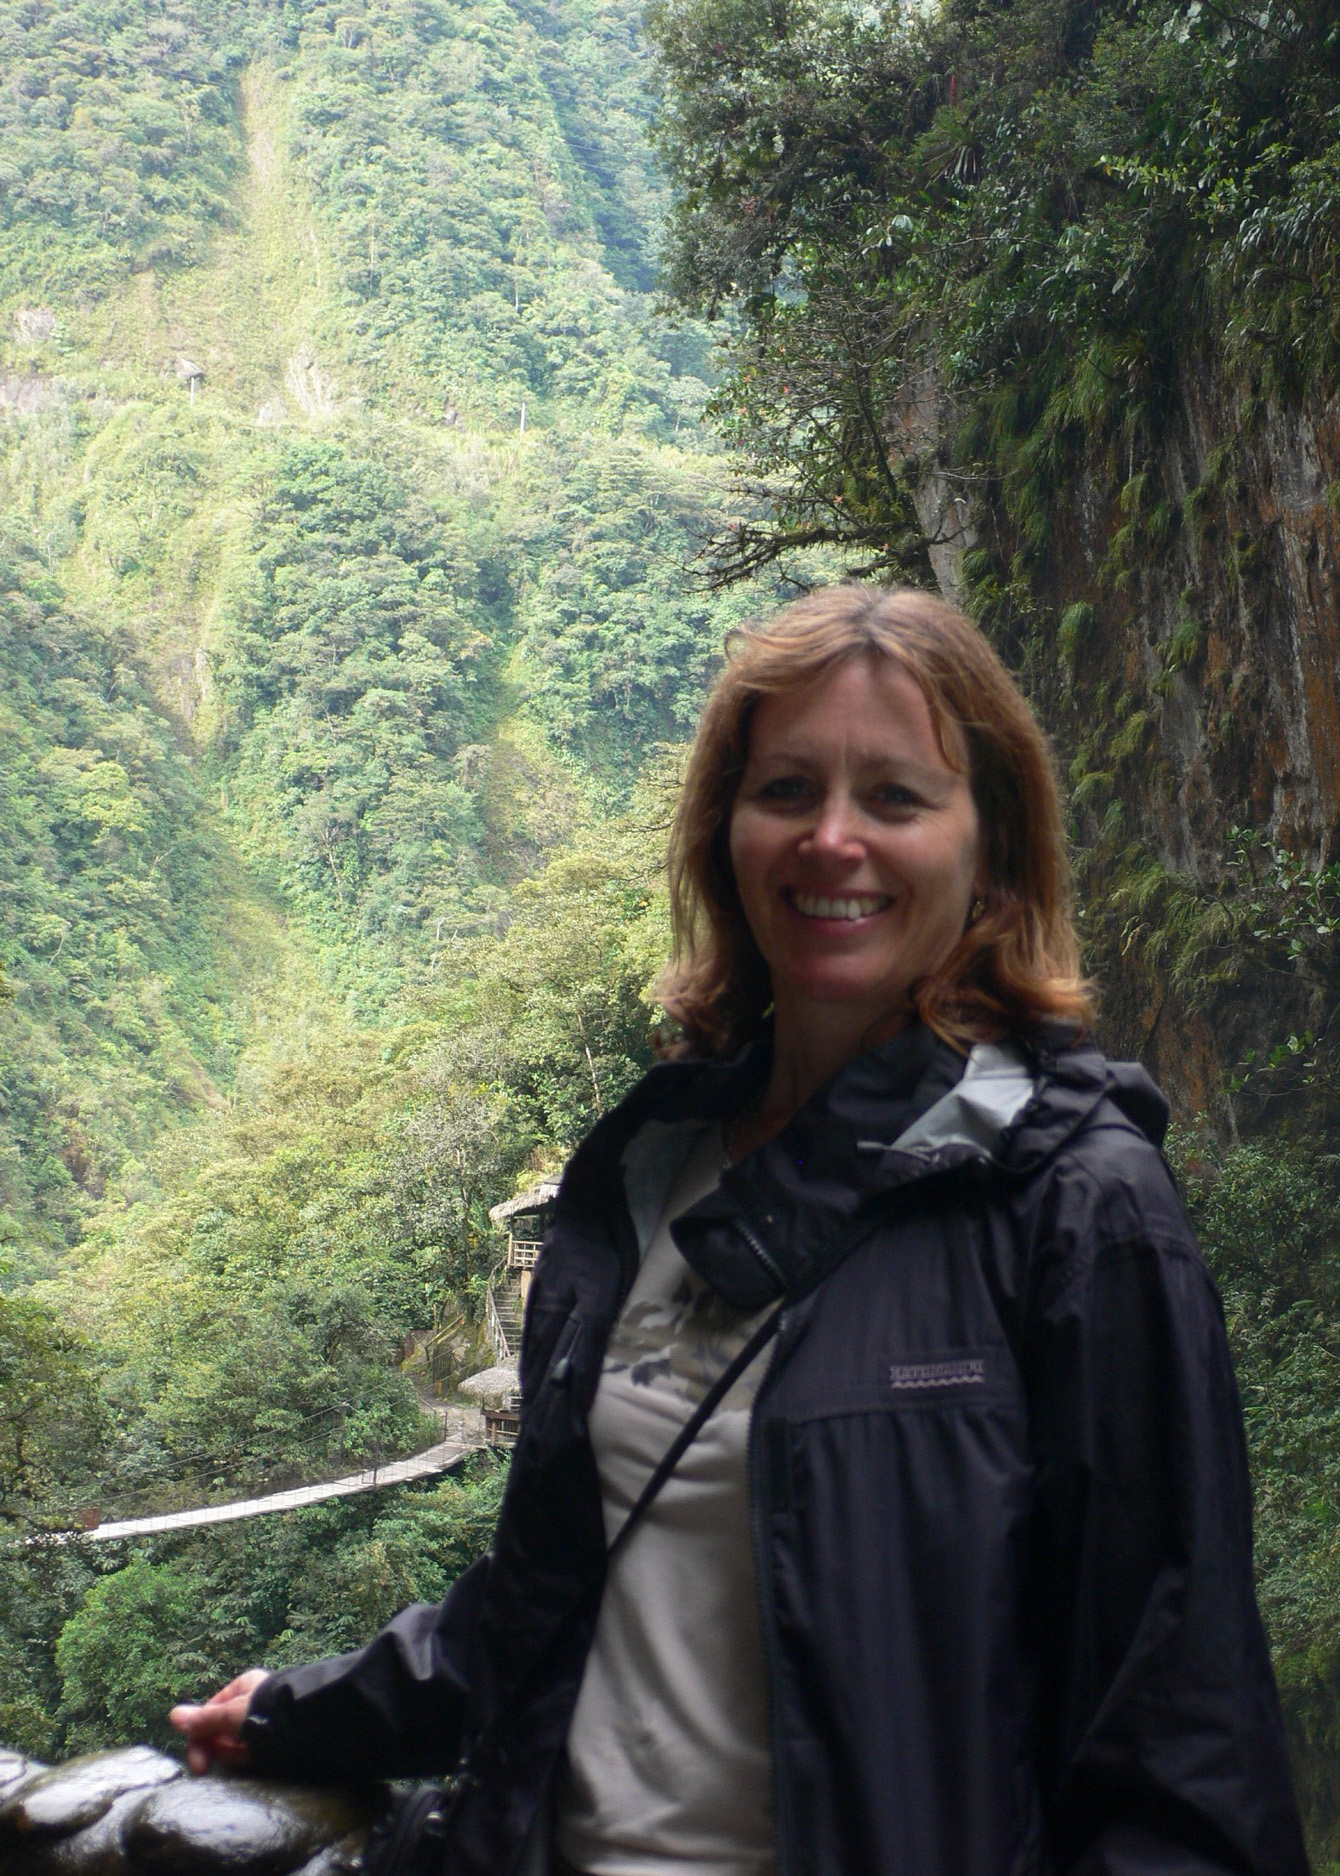 Heather at Pailon del Diablo waterfall Banos